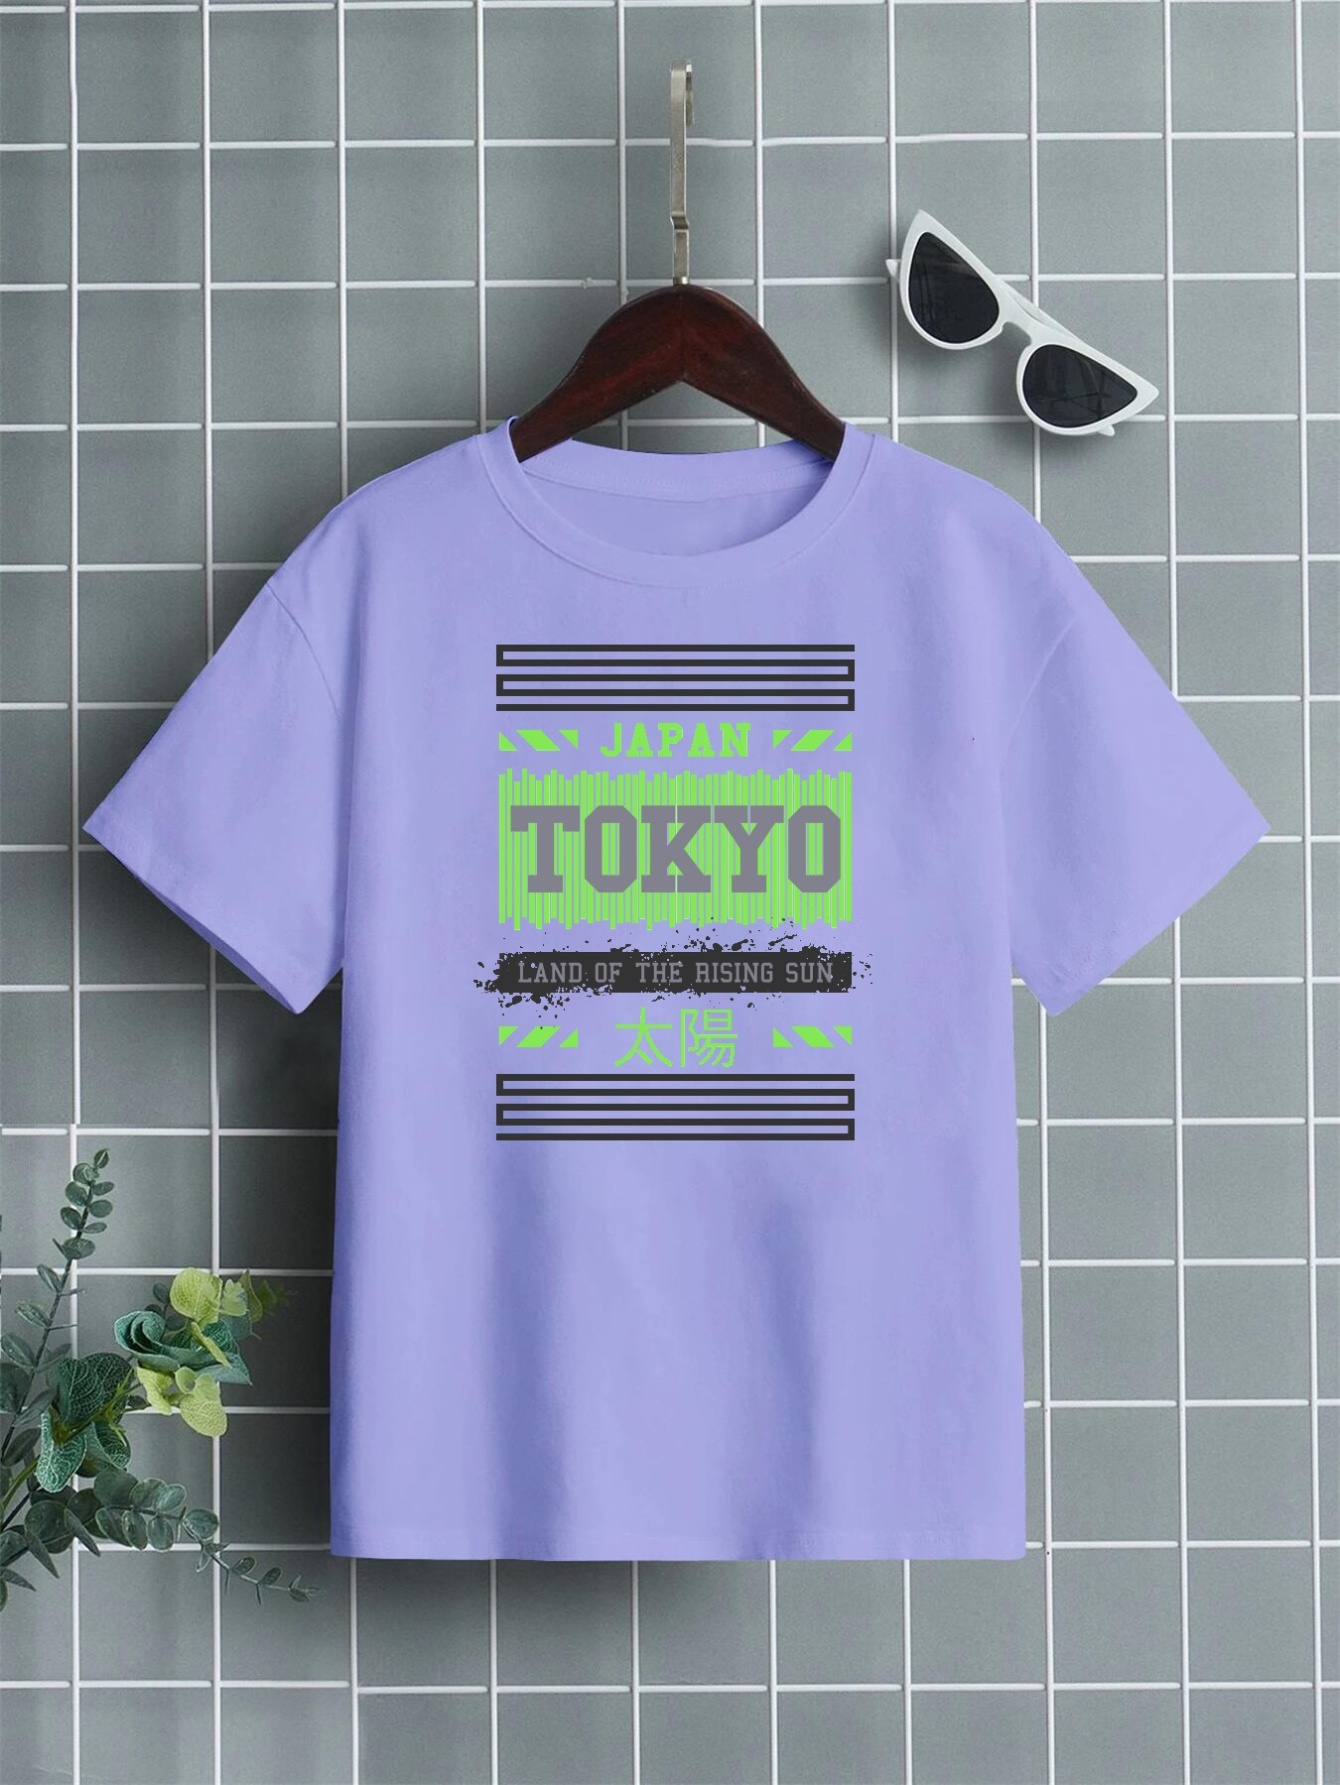 Roblox Print Kids Boys T-shirt Summer Short Sleeve Crew Neck Casual Tee Tops